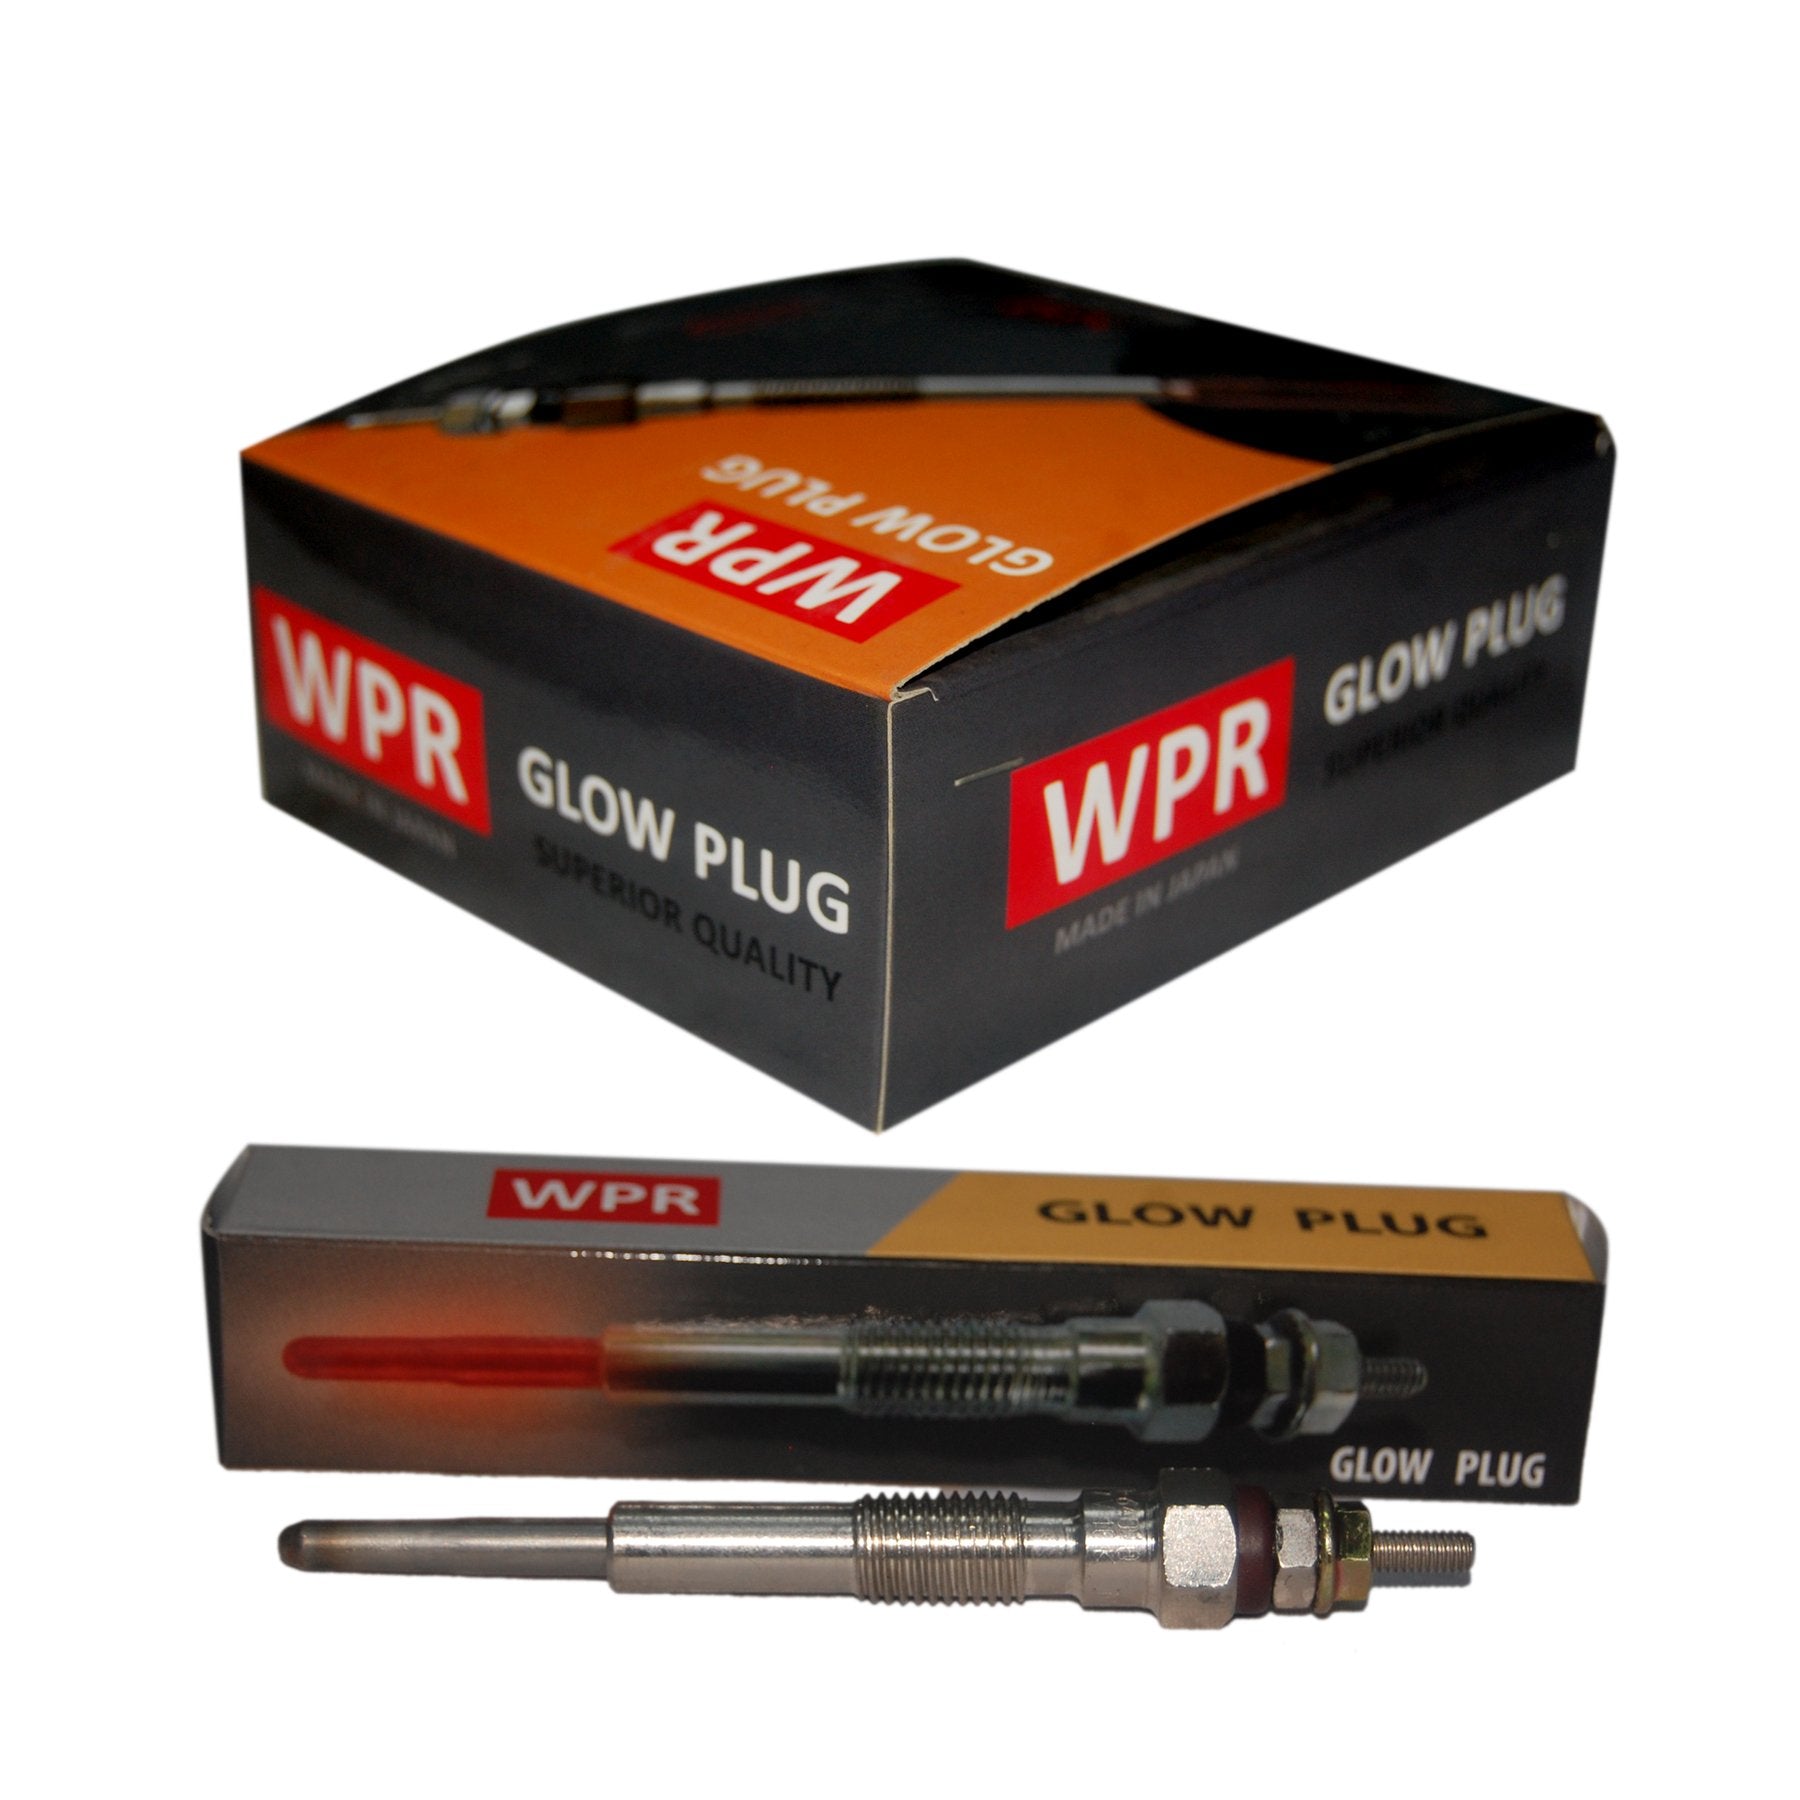 Glow Plug, WPR, PT-150 (007095) - Win Store